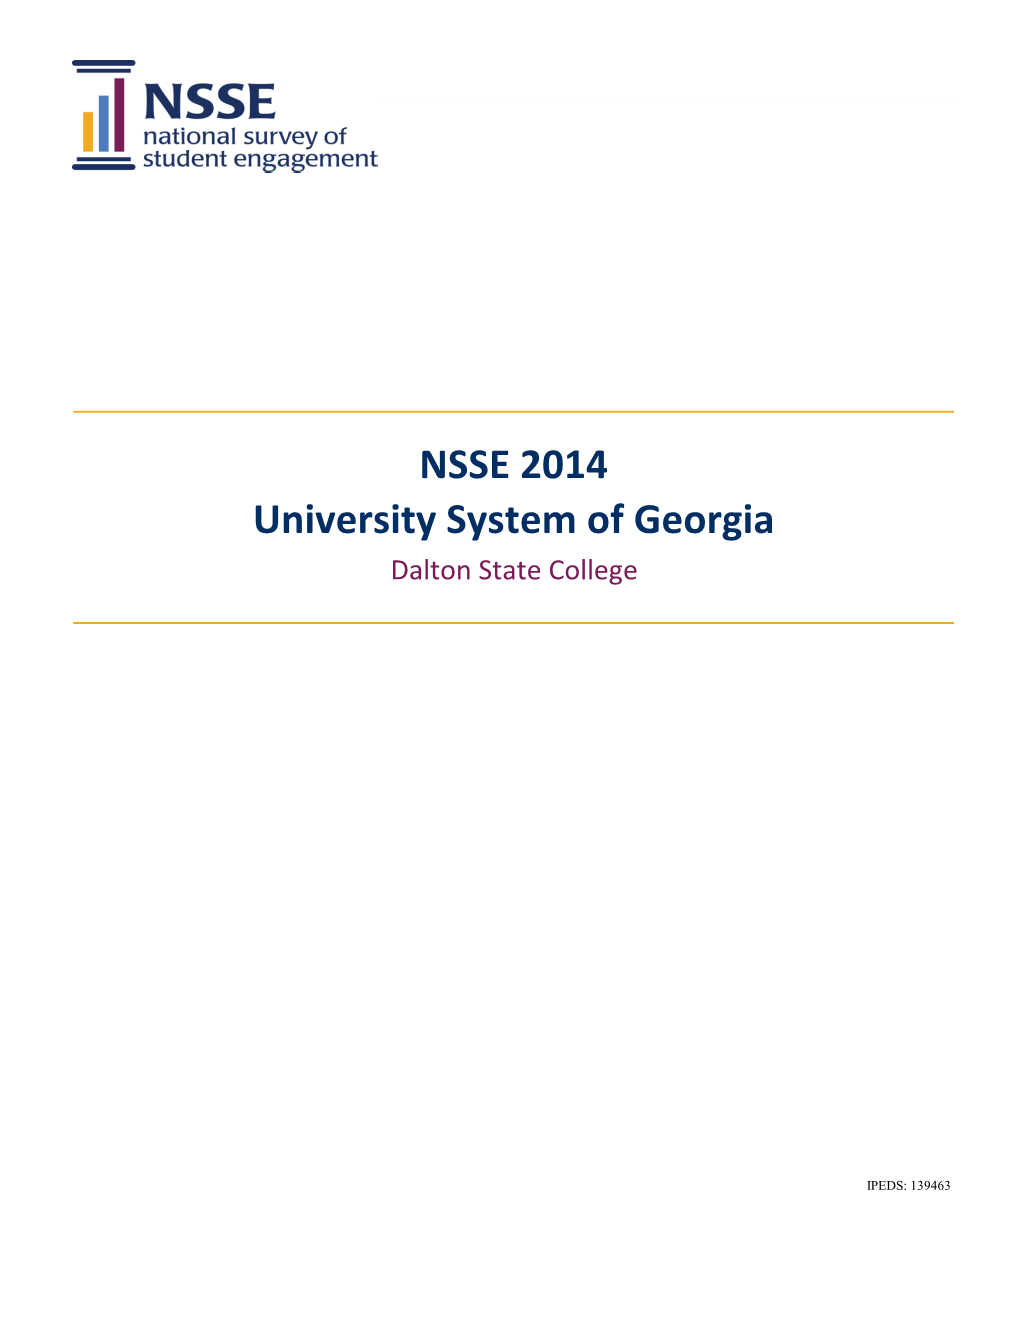 NSSE 2014 University System of Georgia Dalton State College